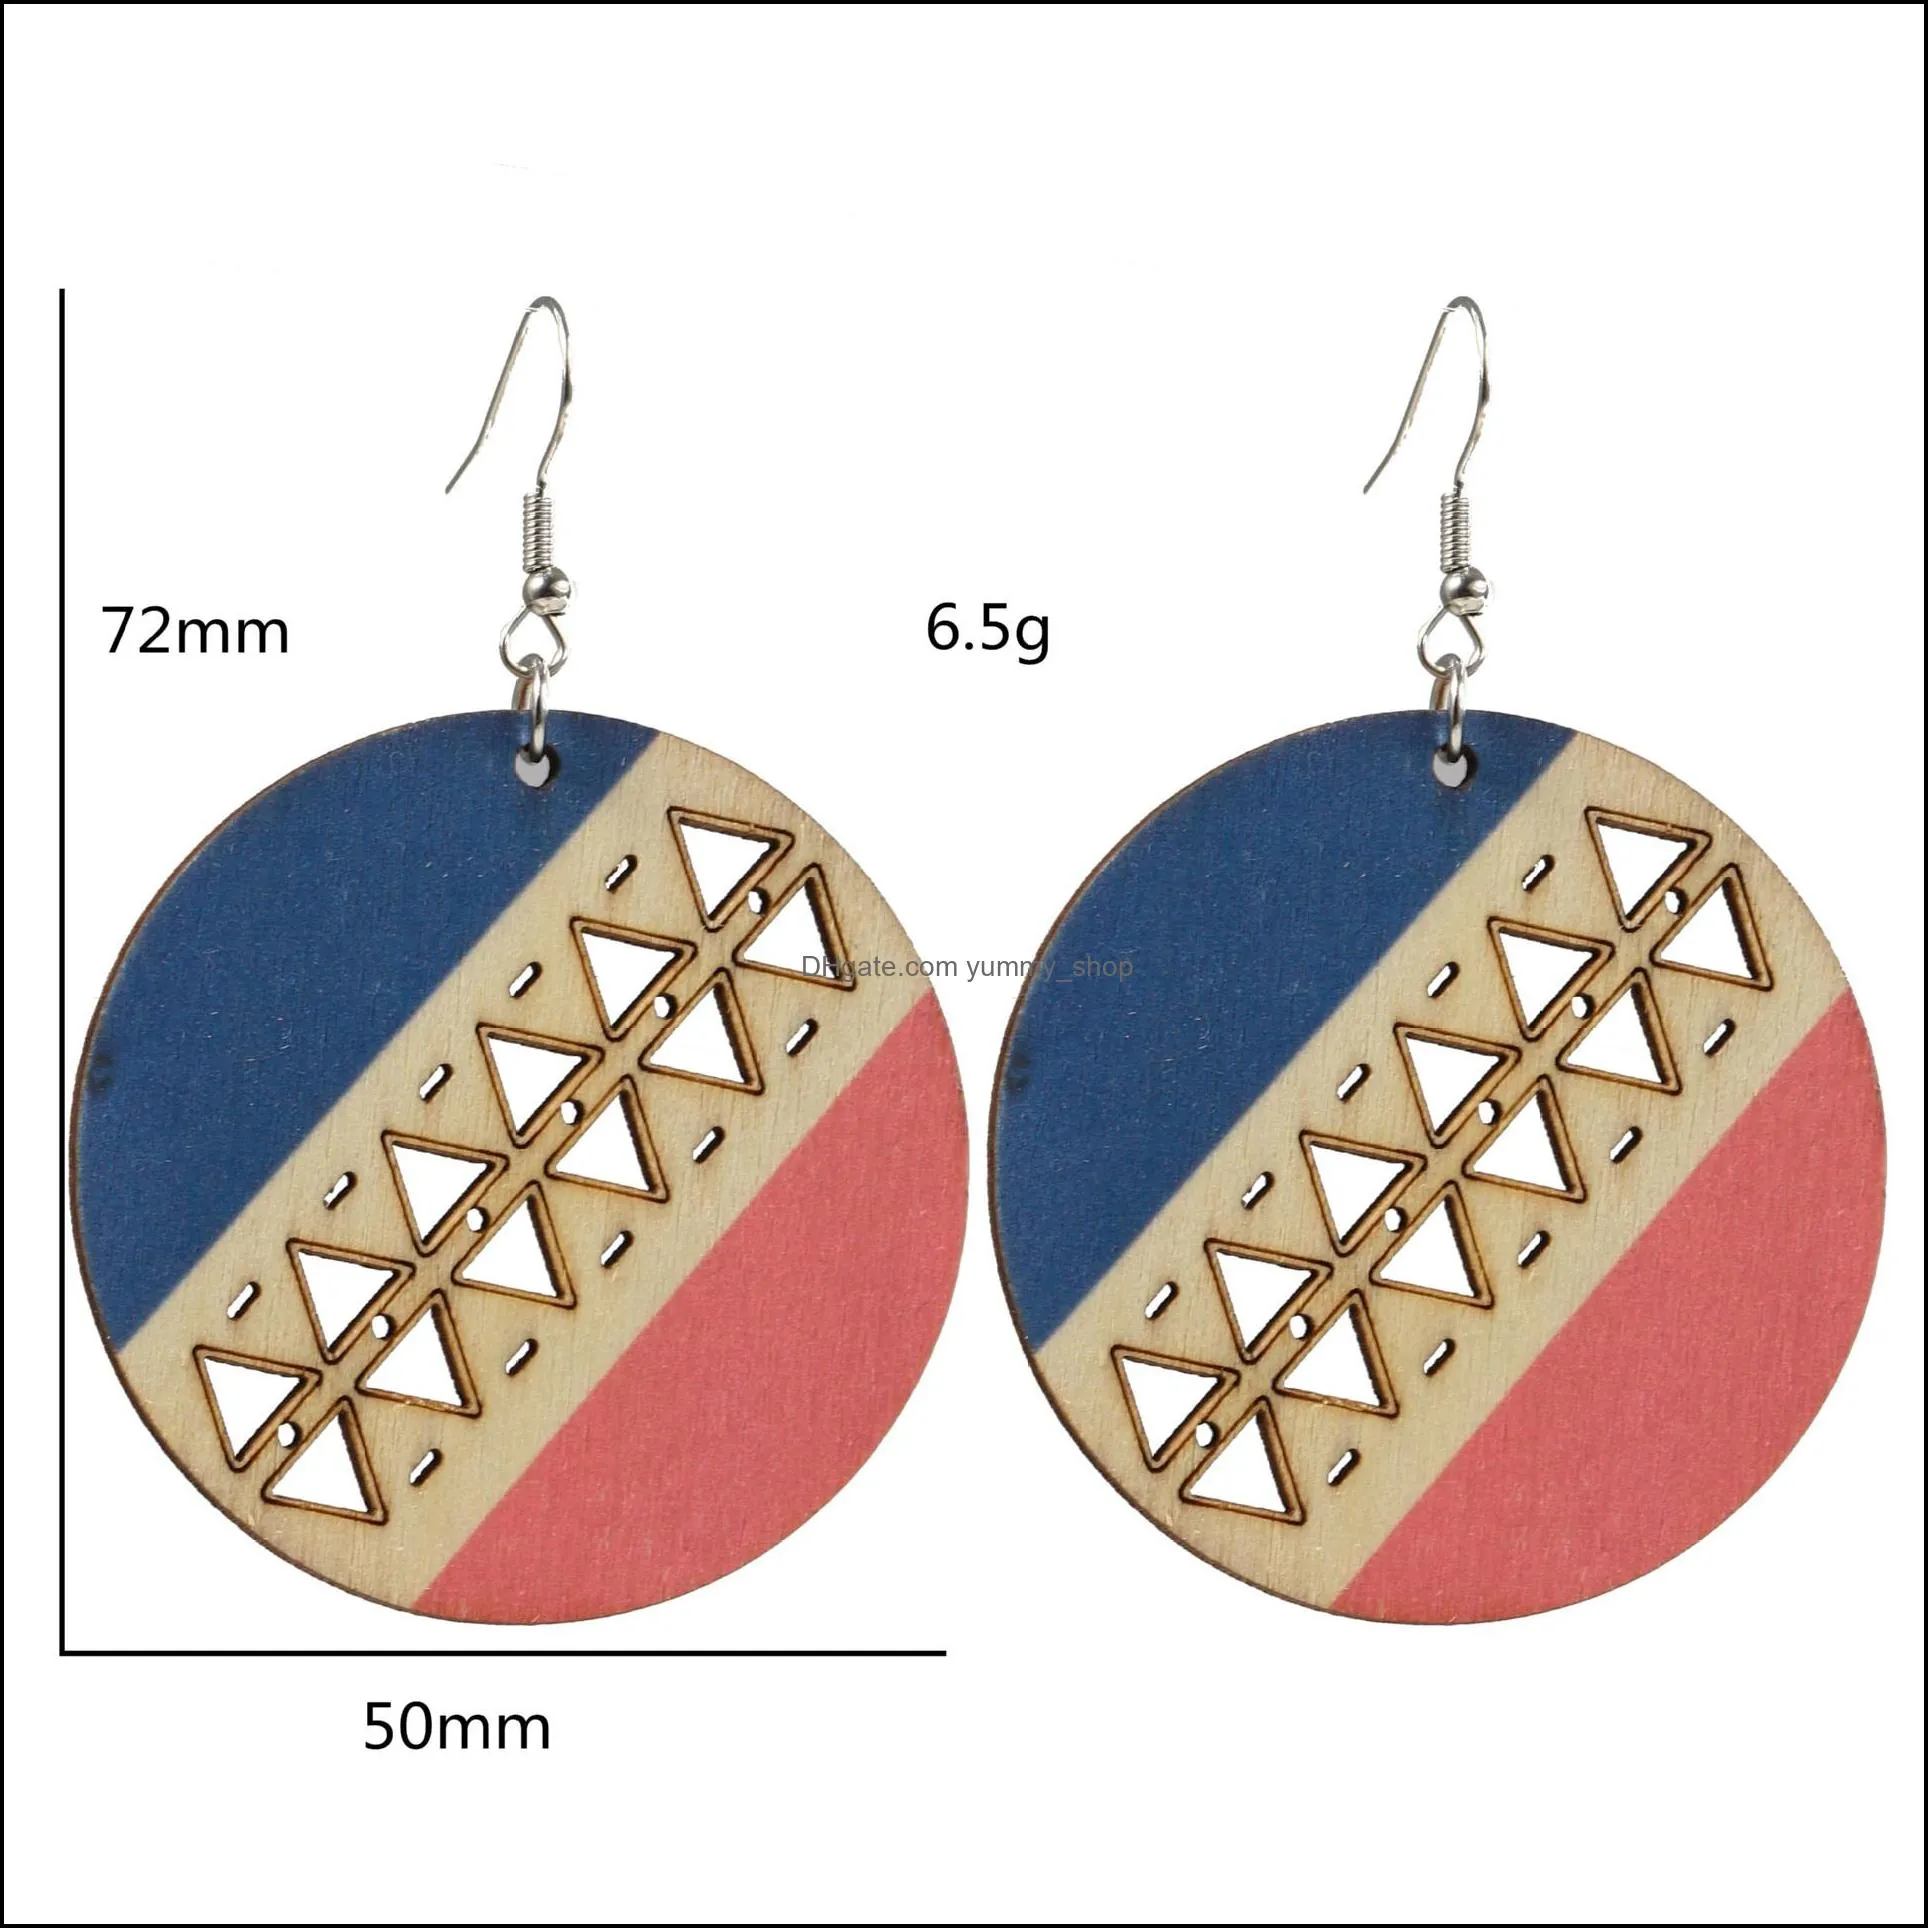  geometric wooden earrings charm for women color matching punk jewelry dangle earring wholesale